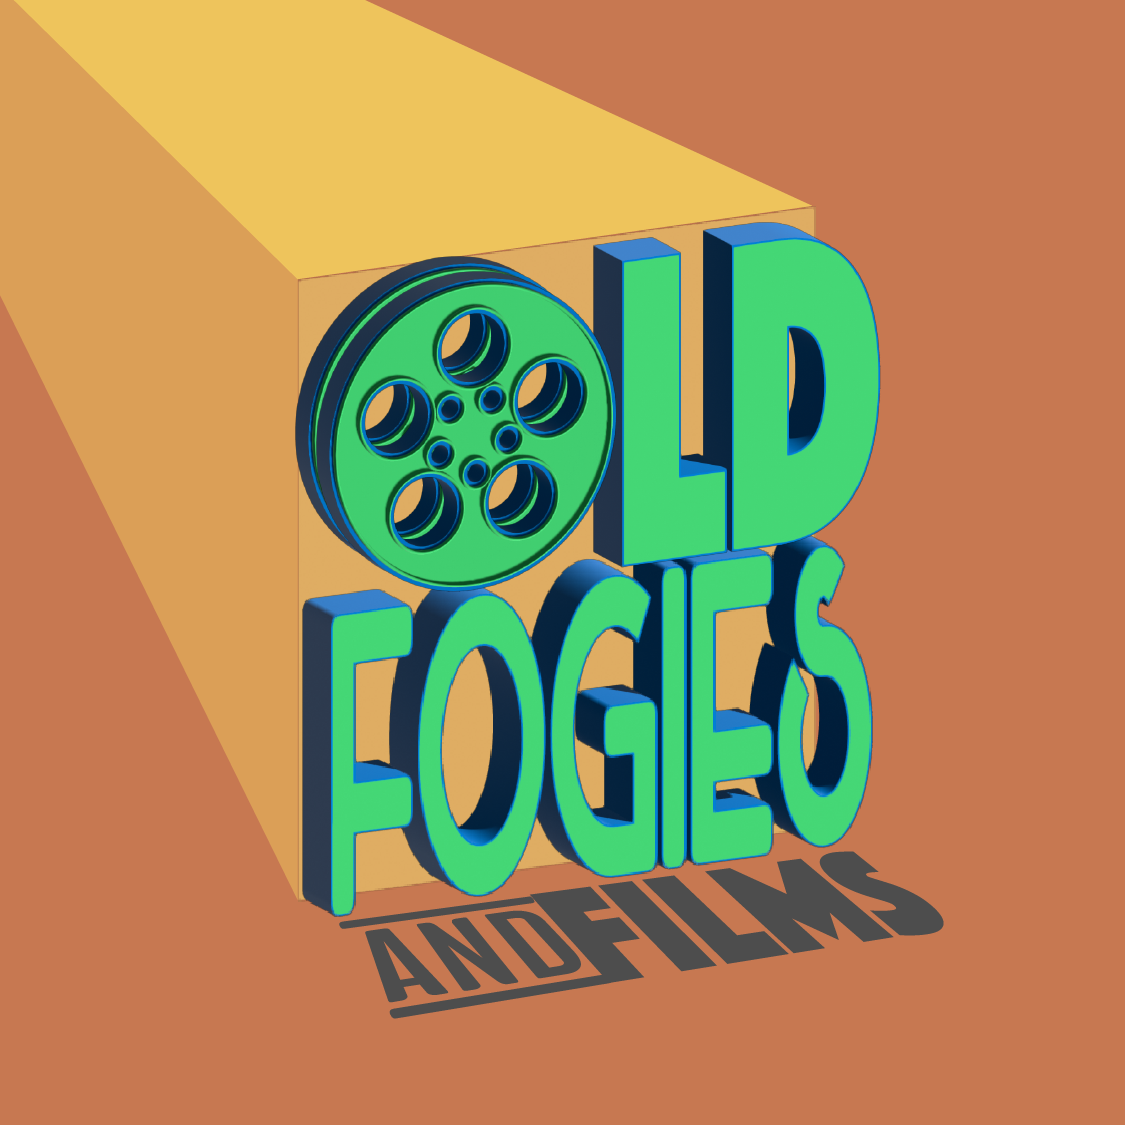 Old Fogies & Films